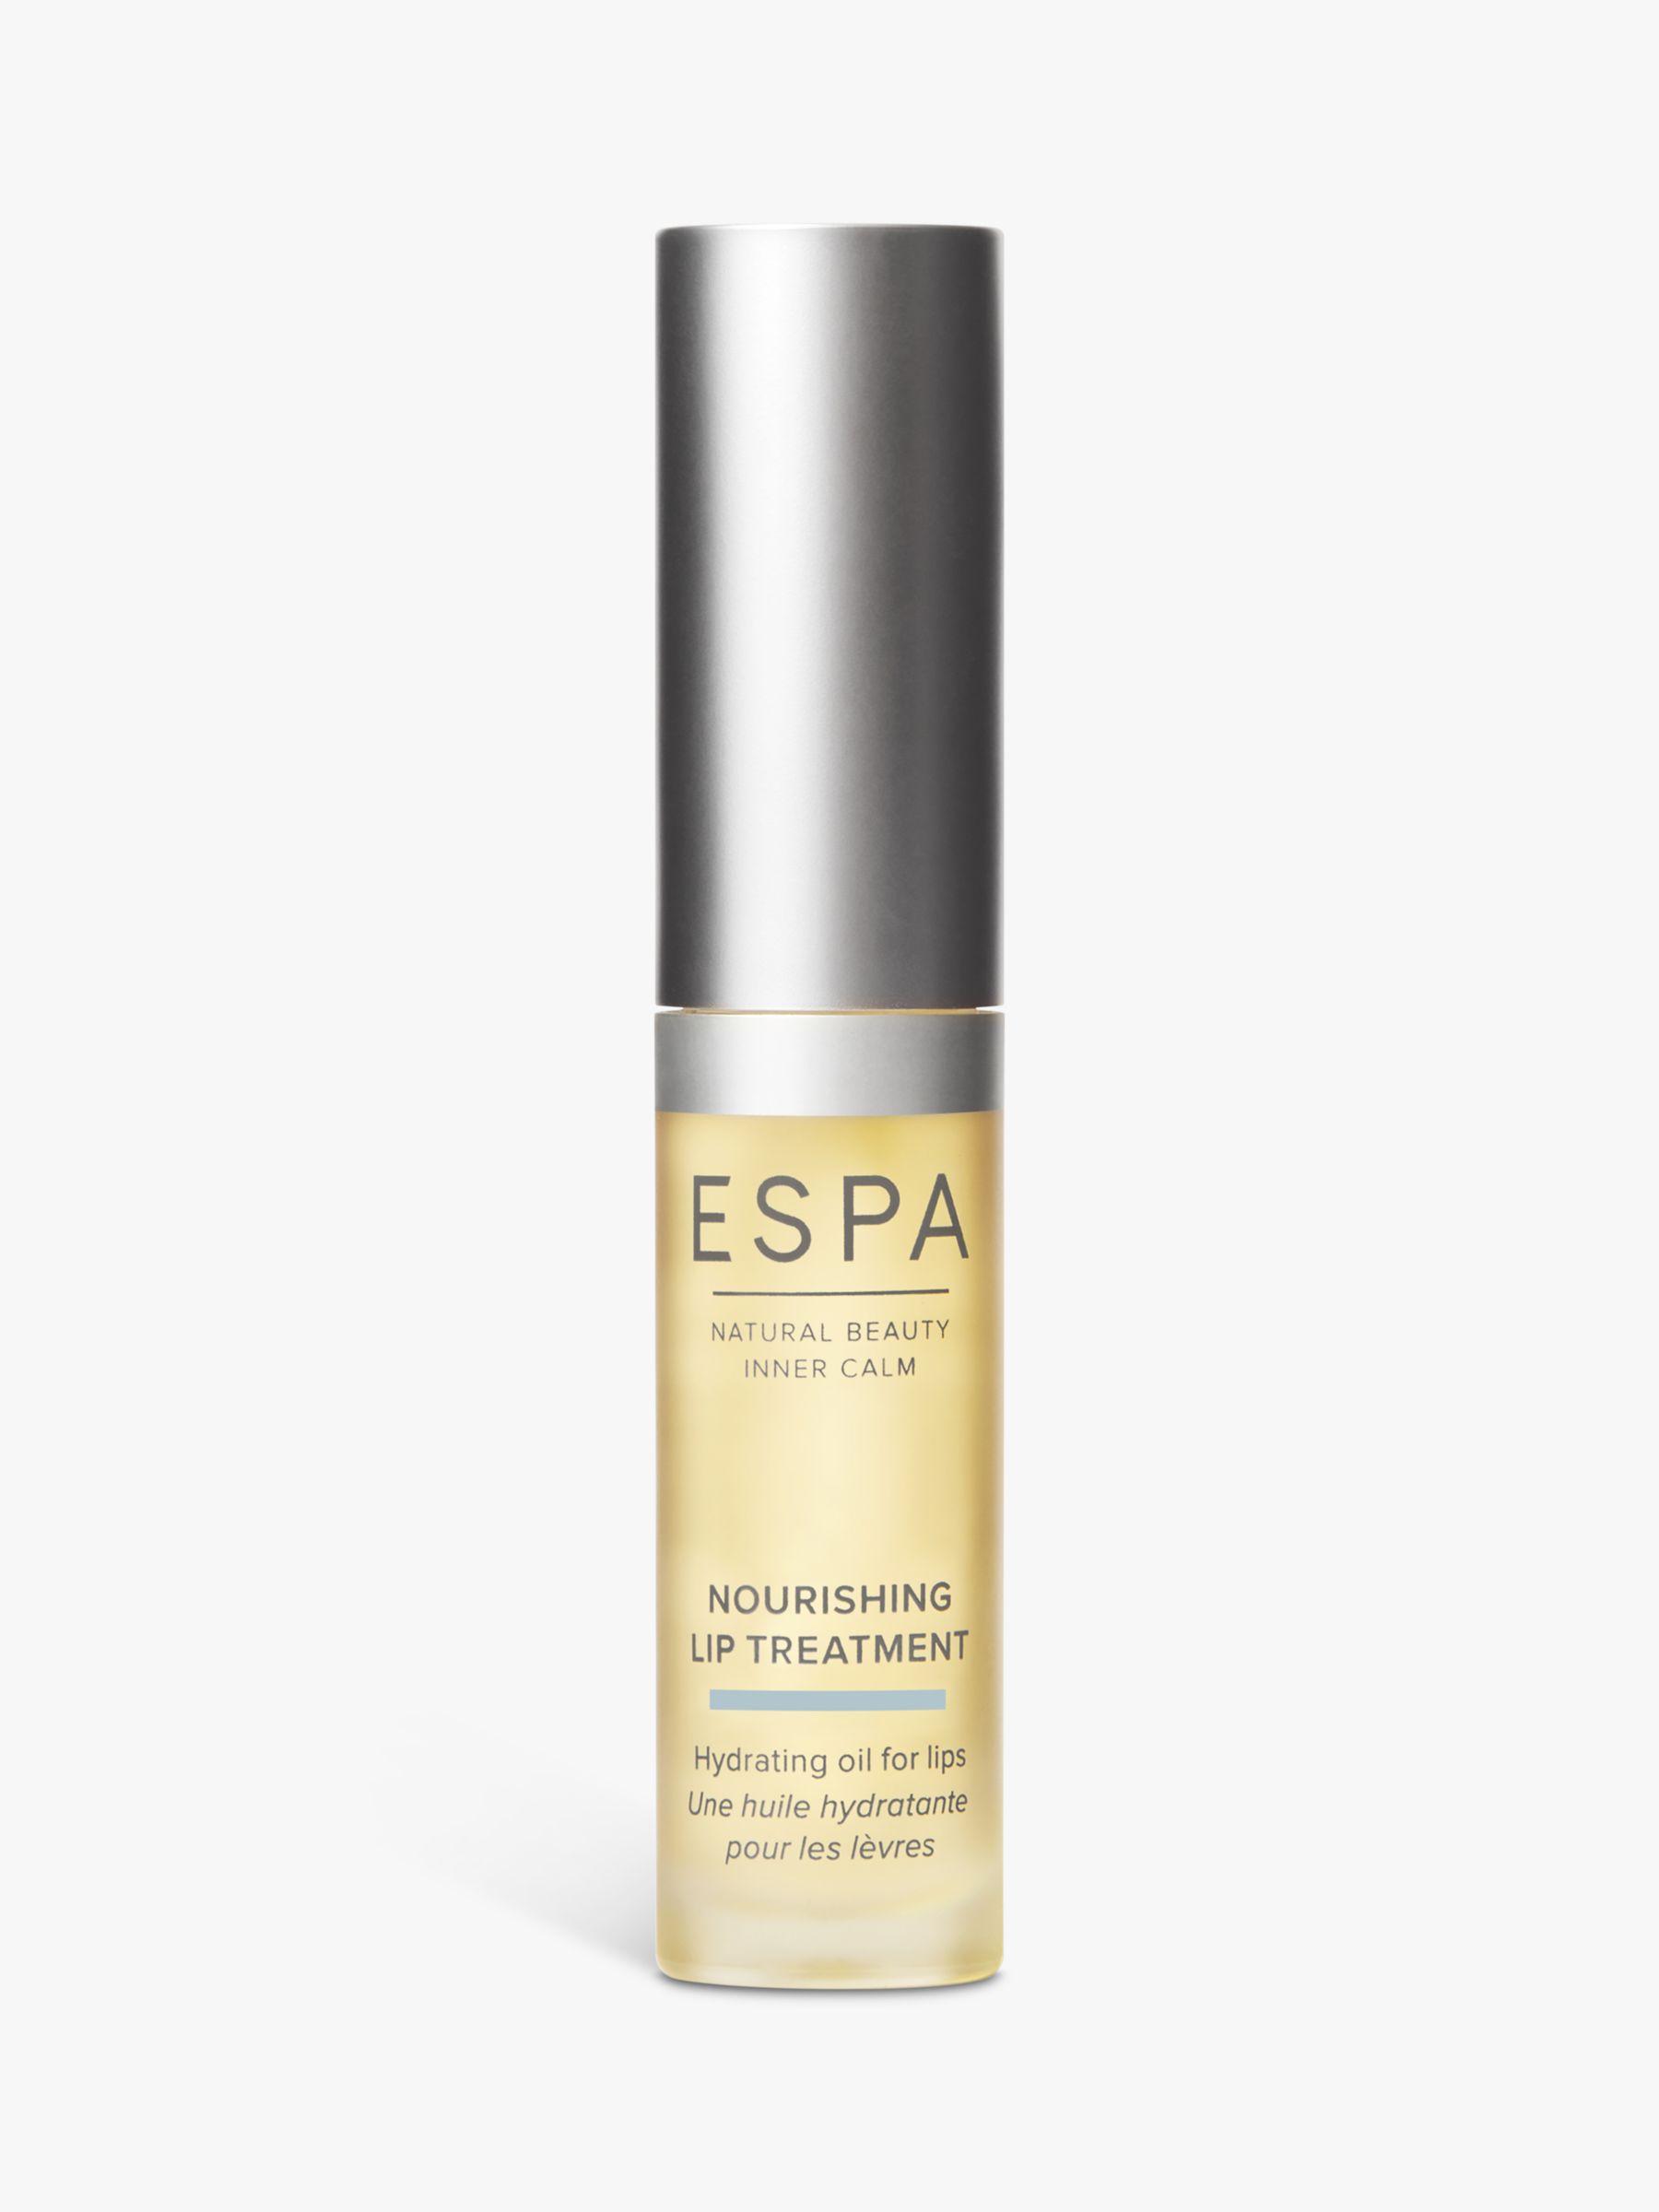 ESPA Nourishing Lip Treatment, 5ml at John Lewis & Partners